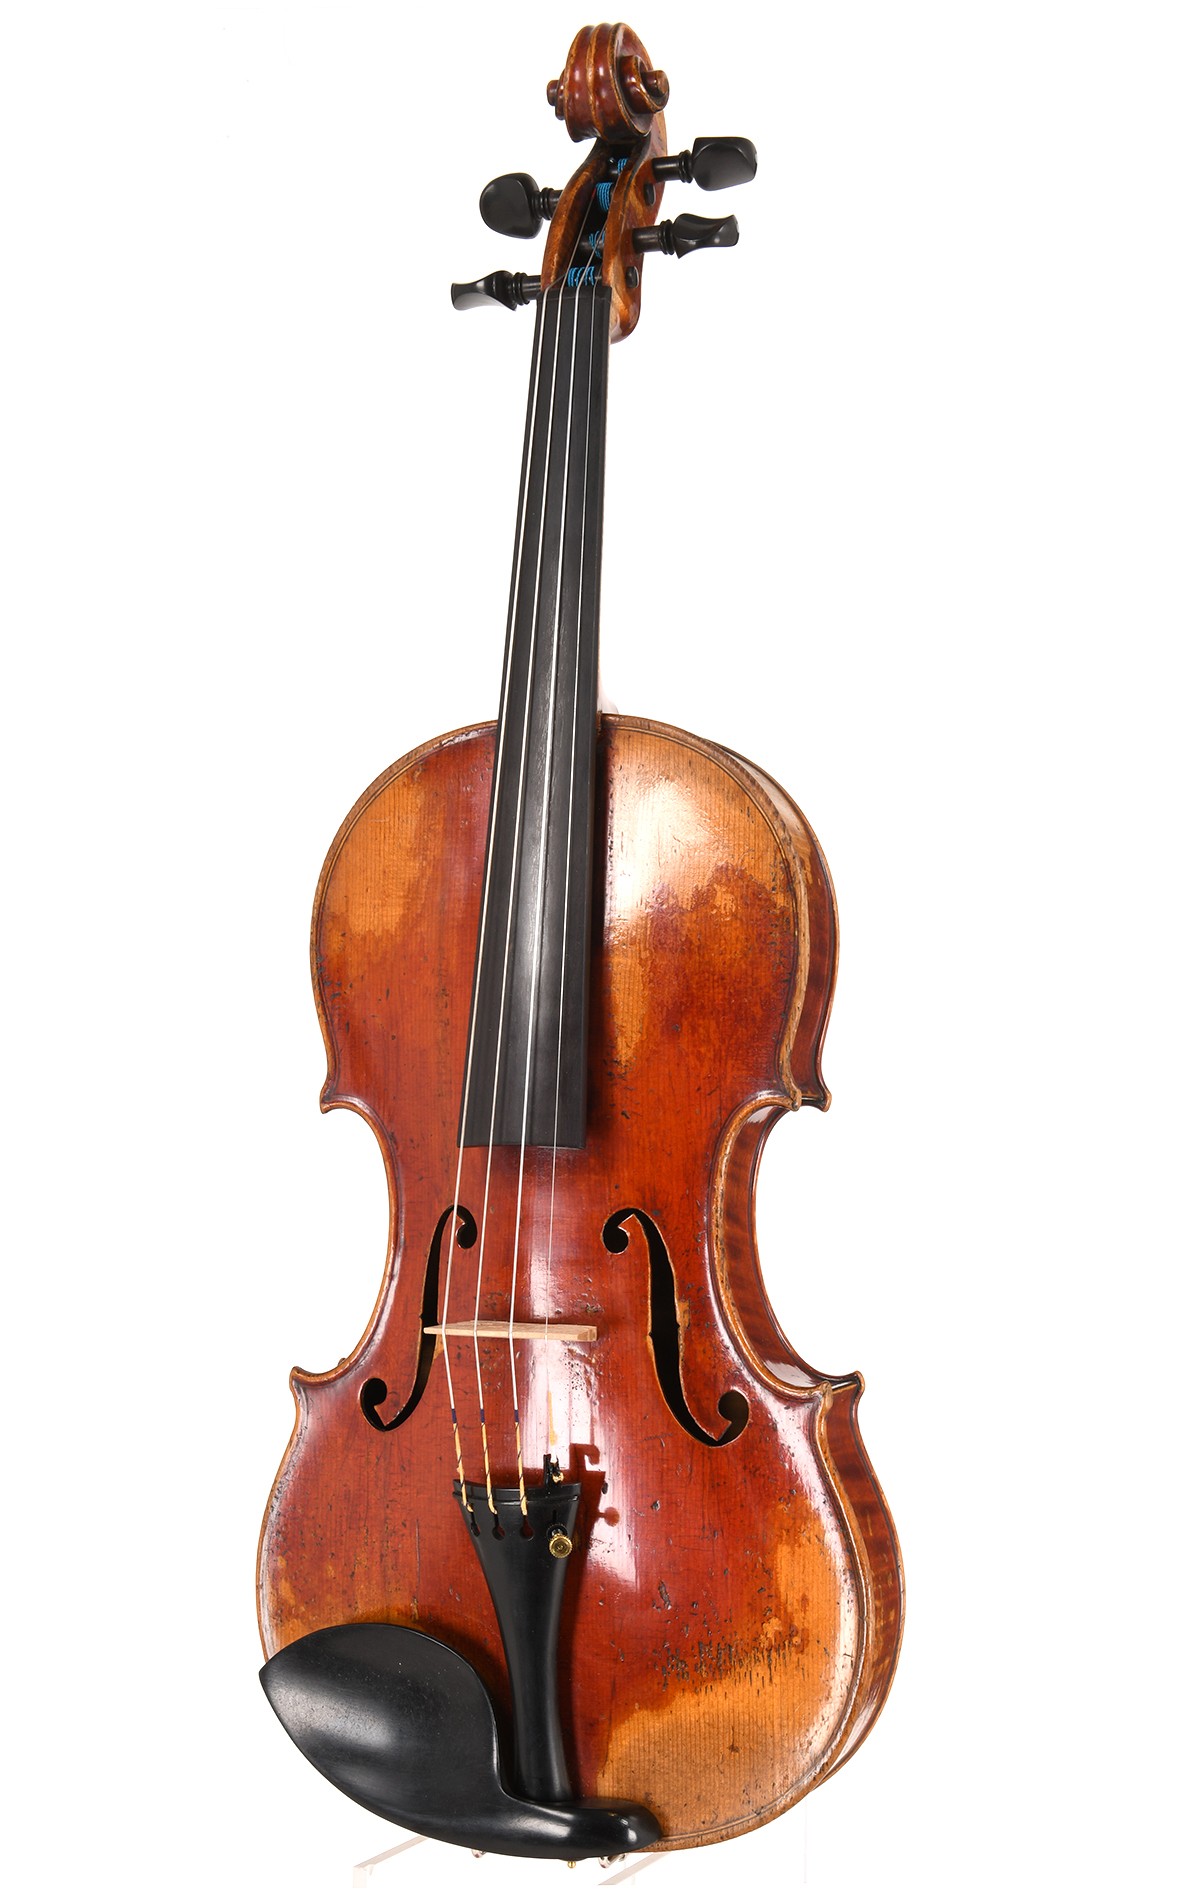 Charles Maucotel, feine Violine